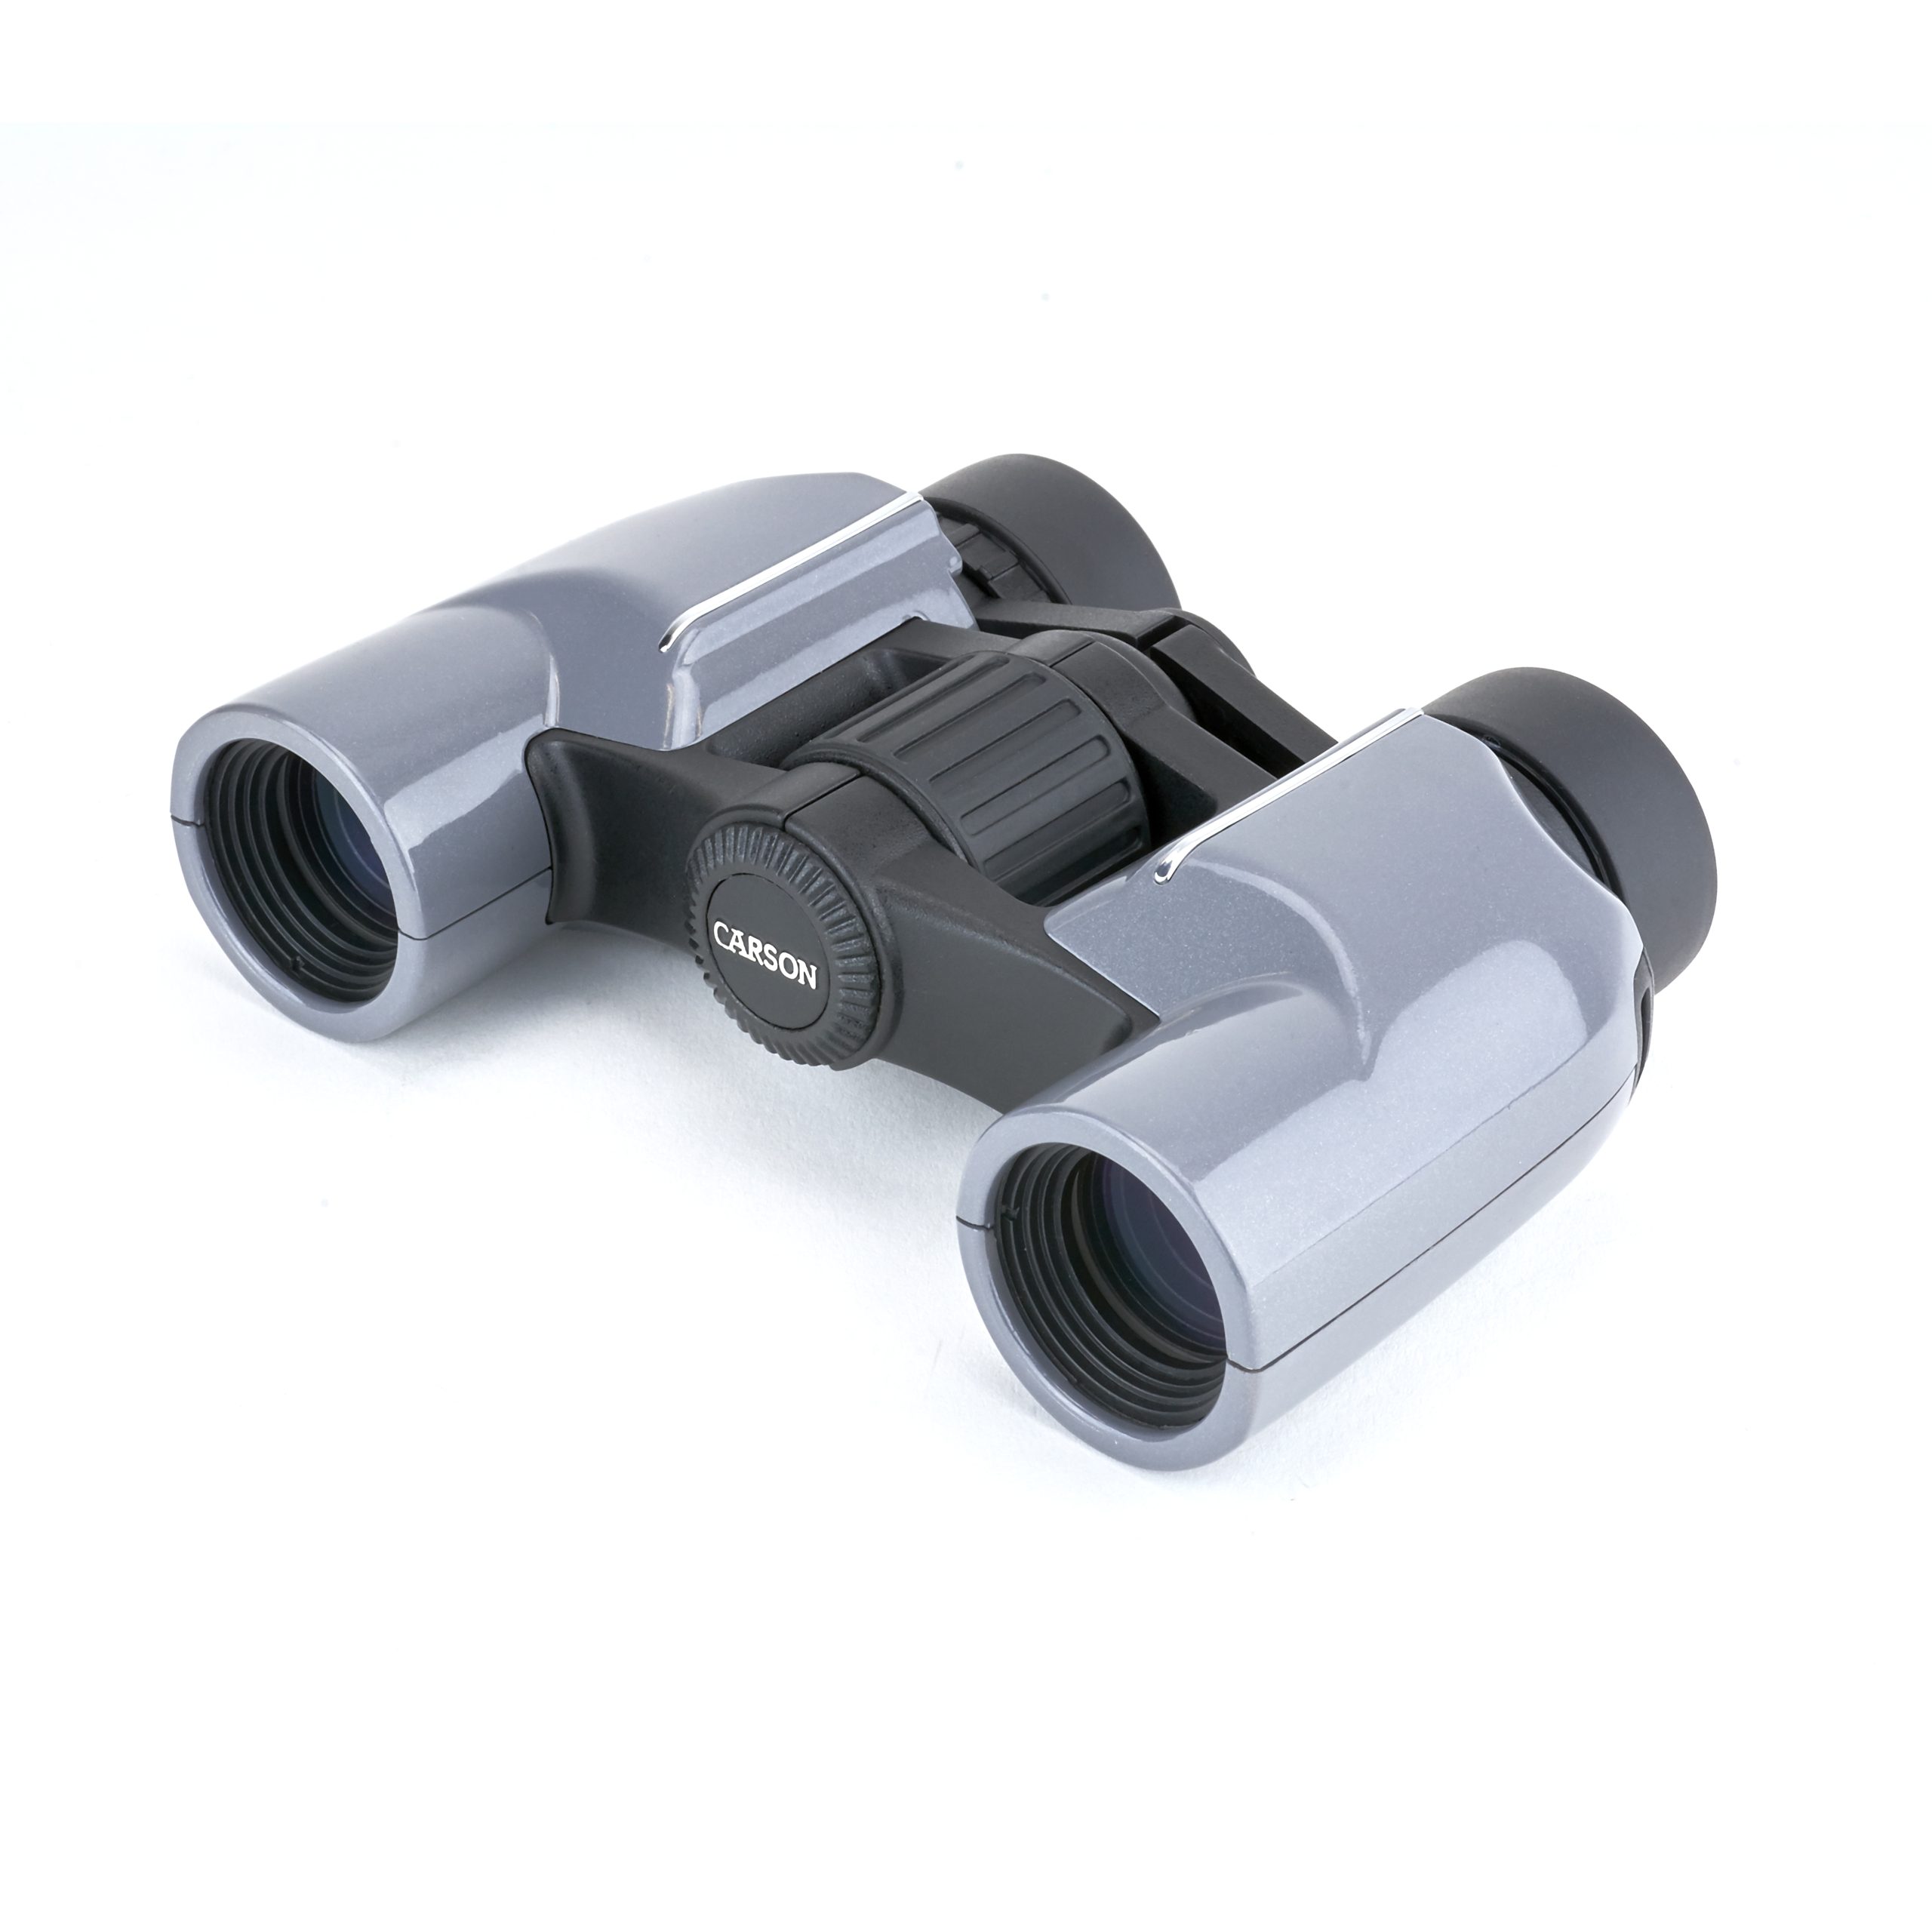 8x24mm Portable Compact Binocular with Poro Prism Optics – Carson Optical